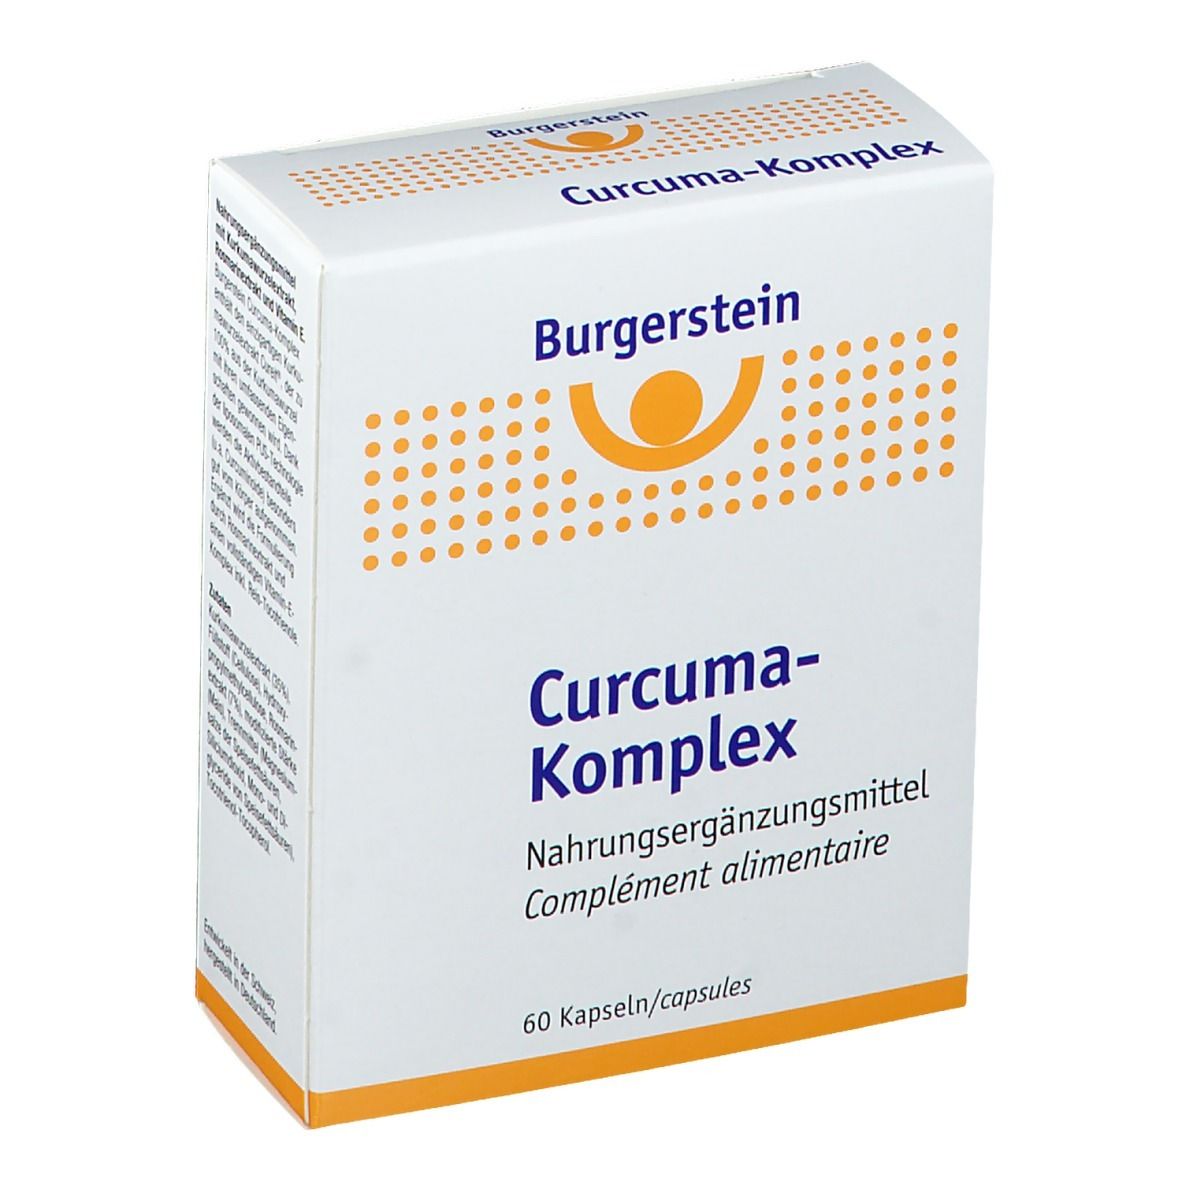 Burgerstein Curcuma-Komplex